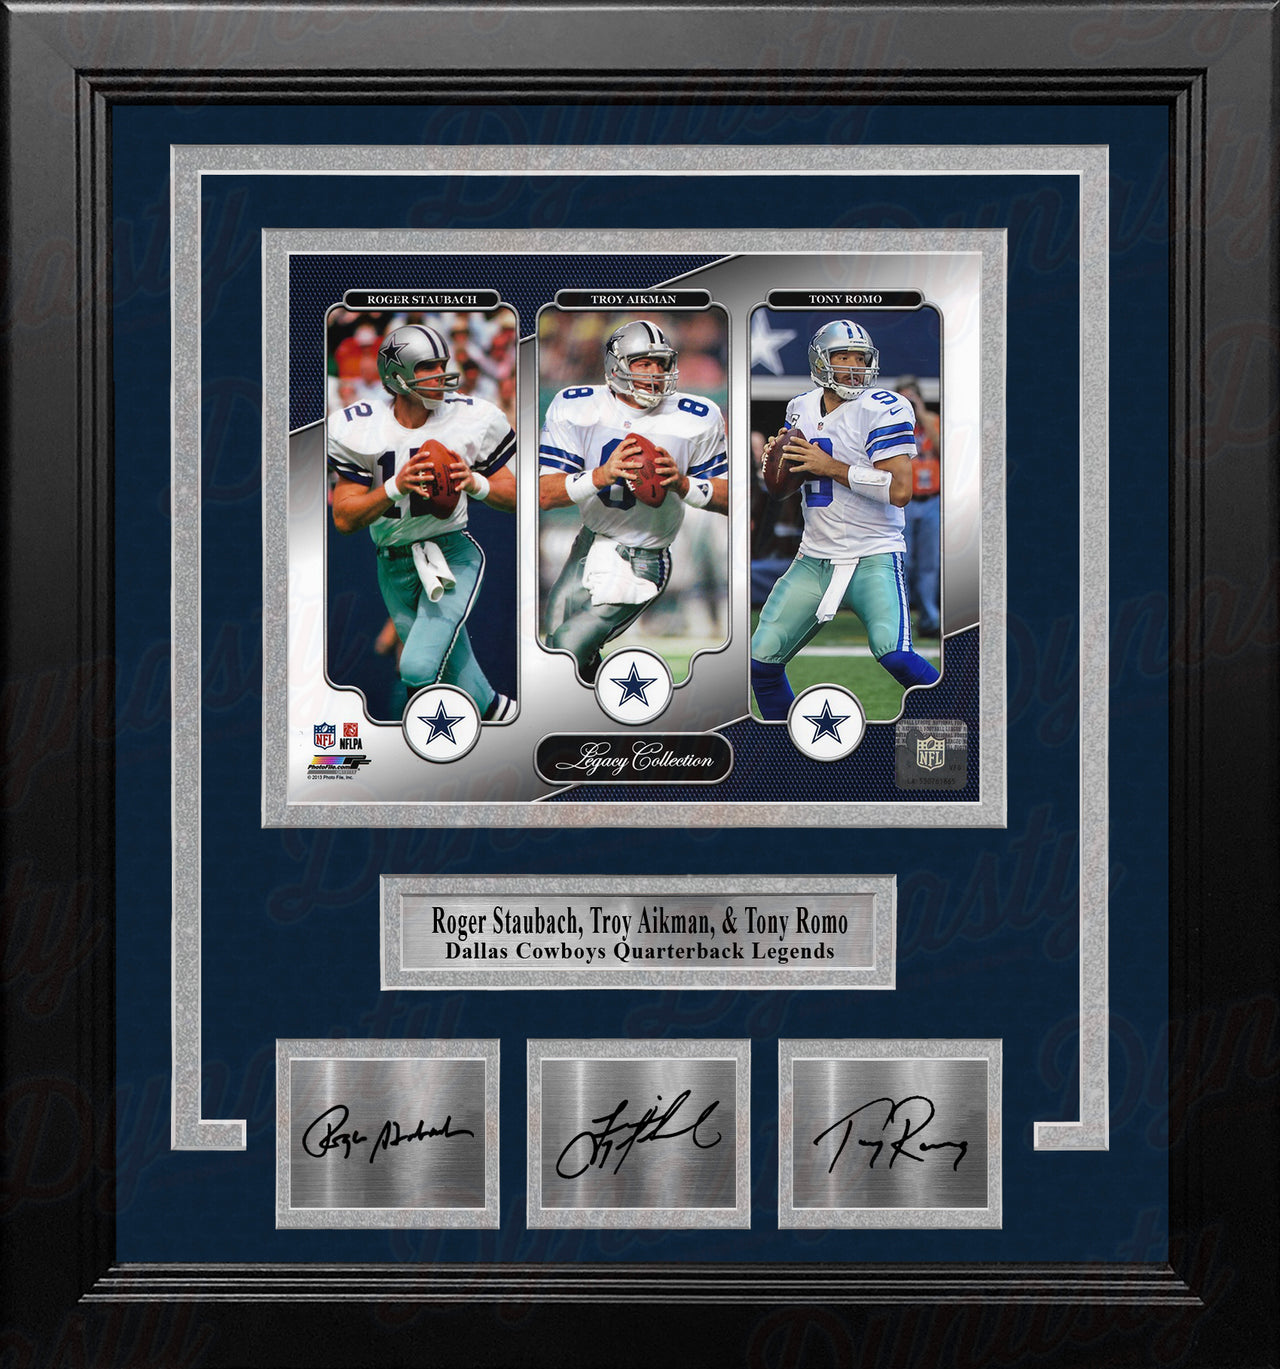 Roger Staubach, Troy Aikman & Tony Romo Dallas Cowboys 8x10 Framed Photo with Engraved Autographs